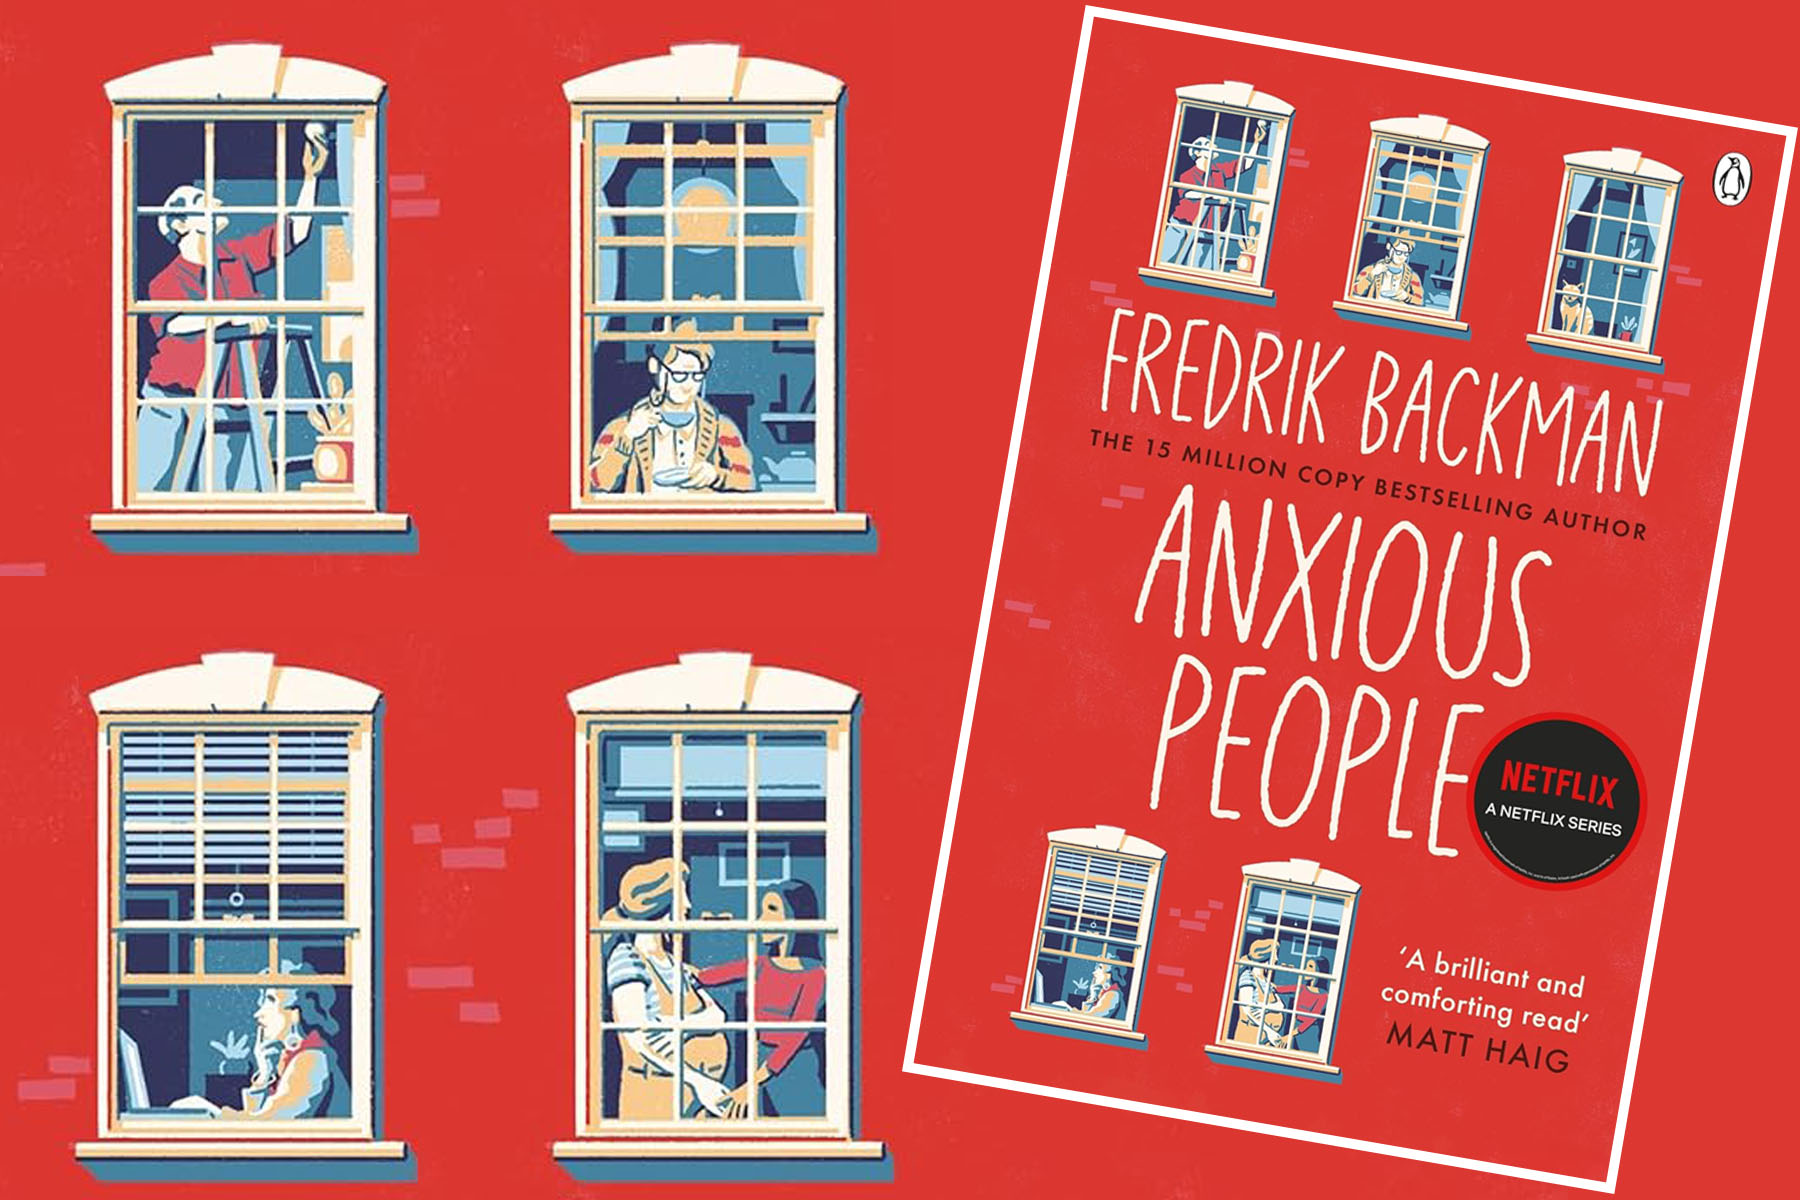 fredrik backman's anxious people